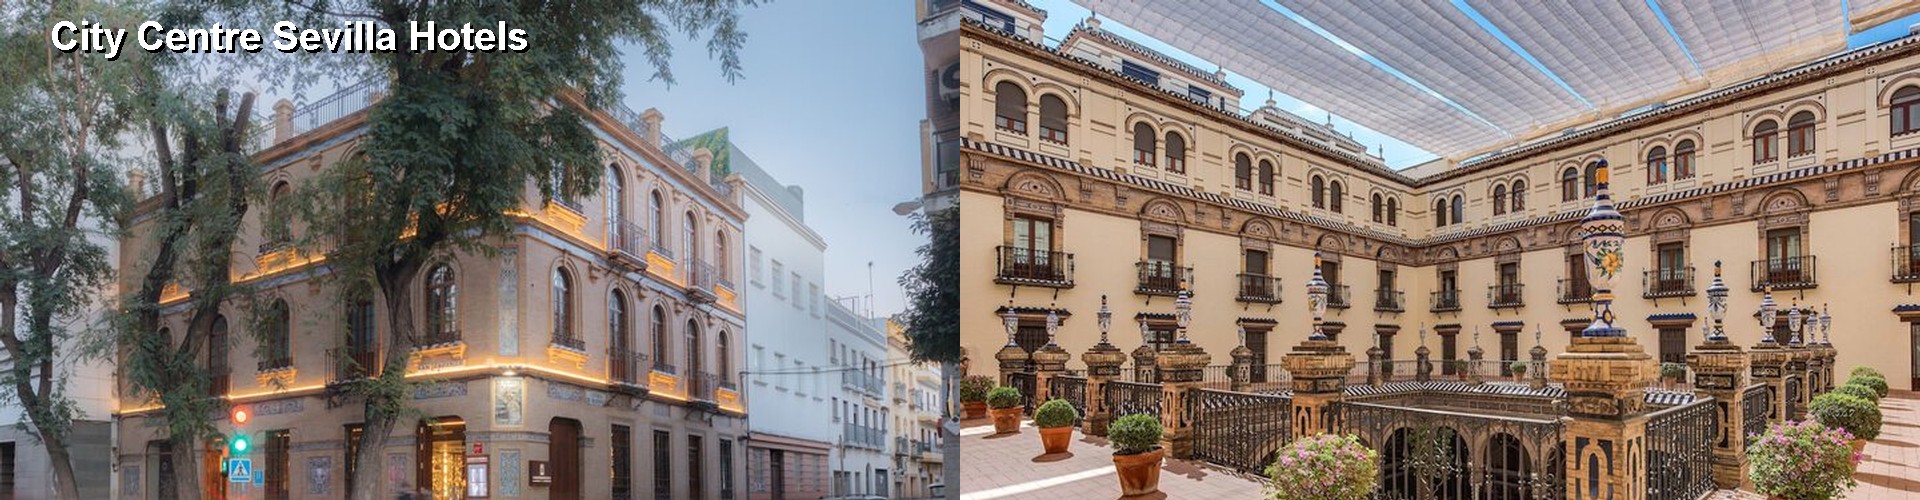 5 Best Hotels near City Centre Sevilla